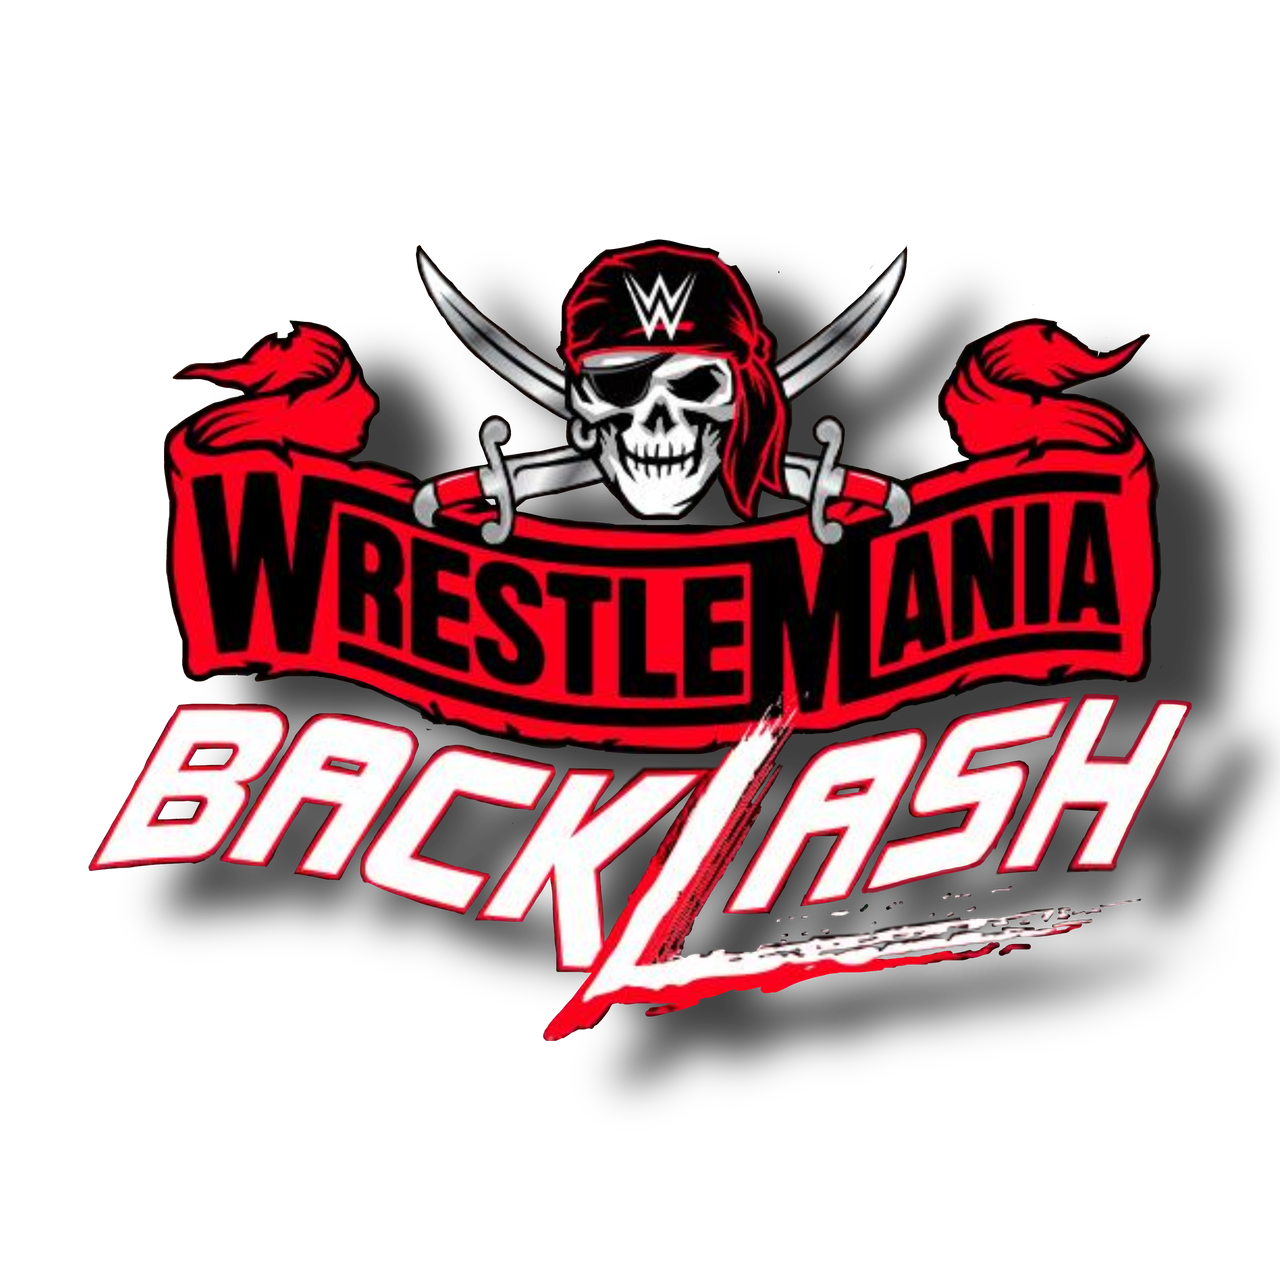 Wwe Wrestlemania Backlash Logo Png 21 By Chxzzyb On Deviantart